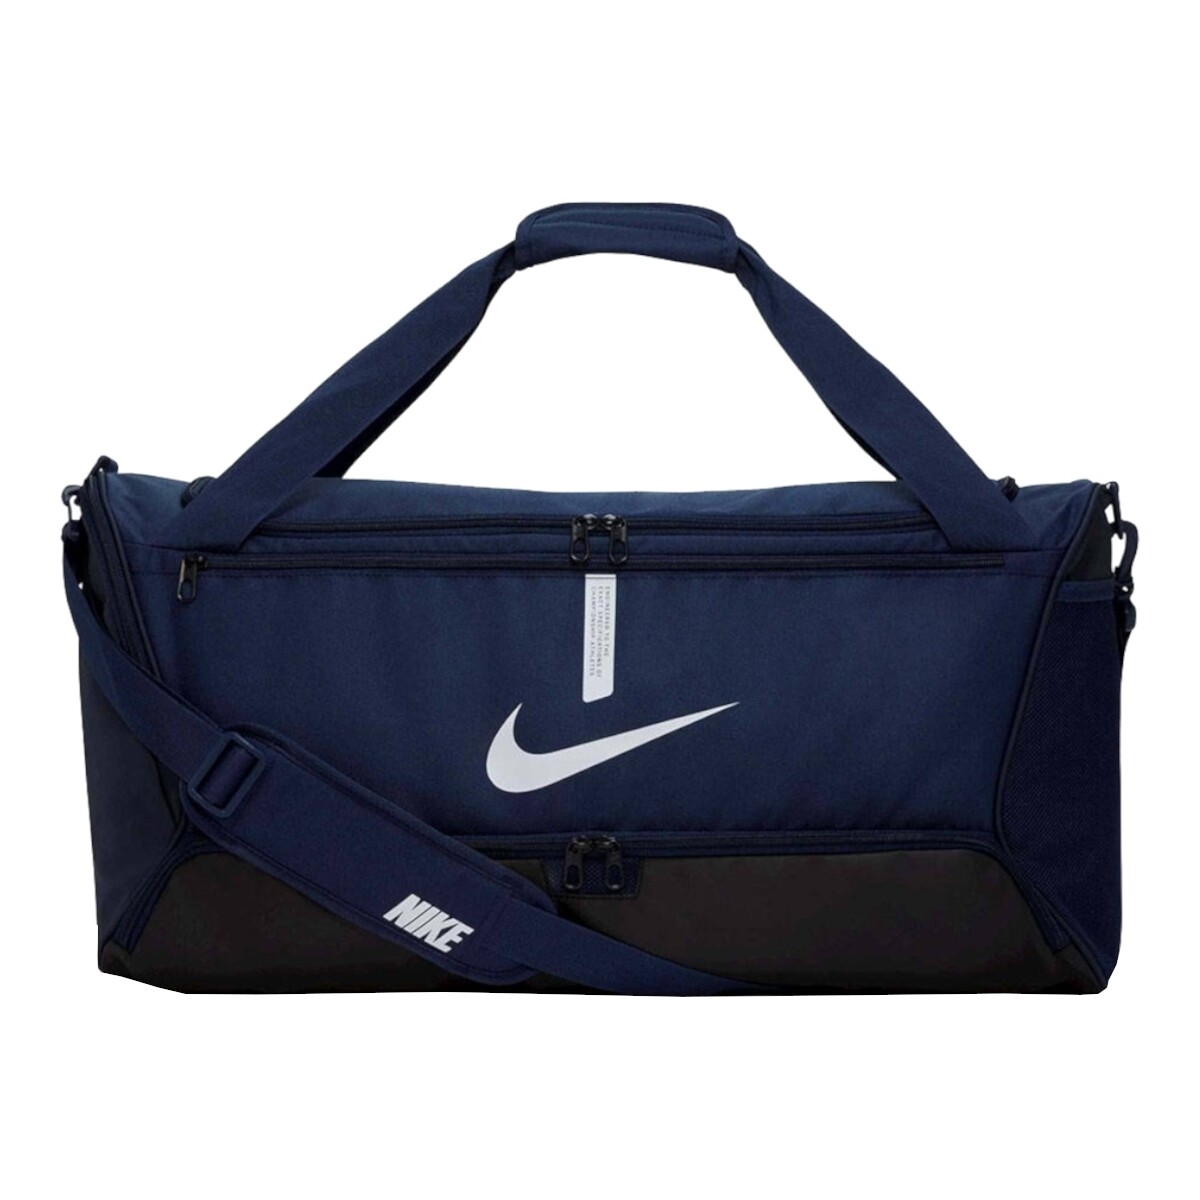 Taška Sportovní tašky Nike Academy Team M Modrá